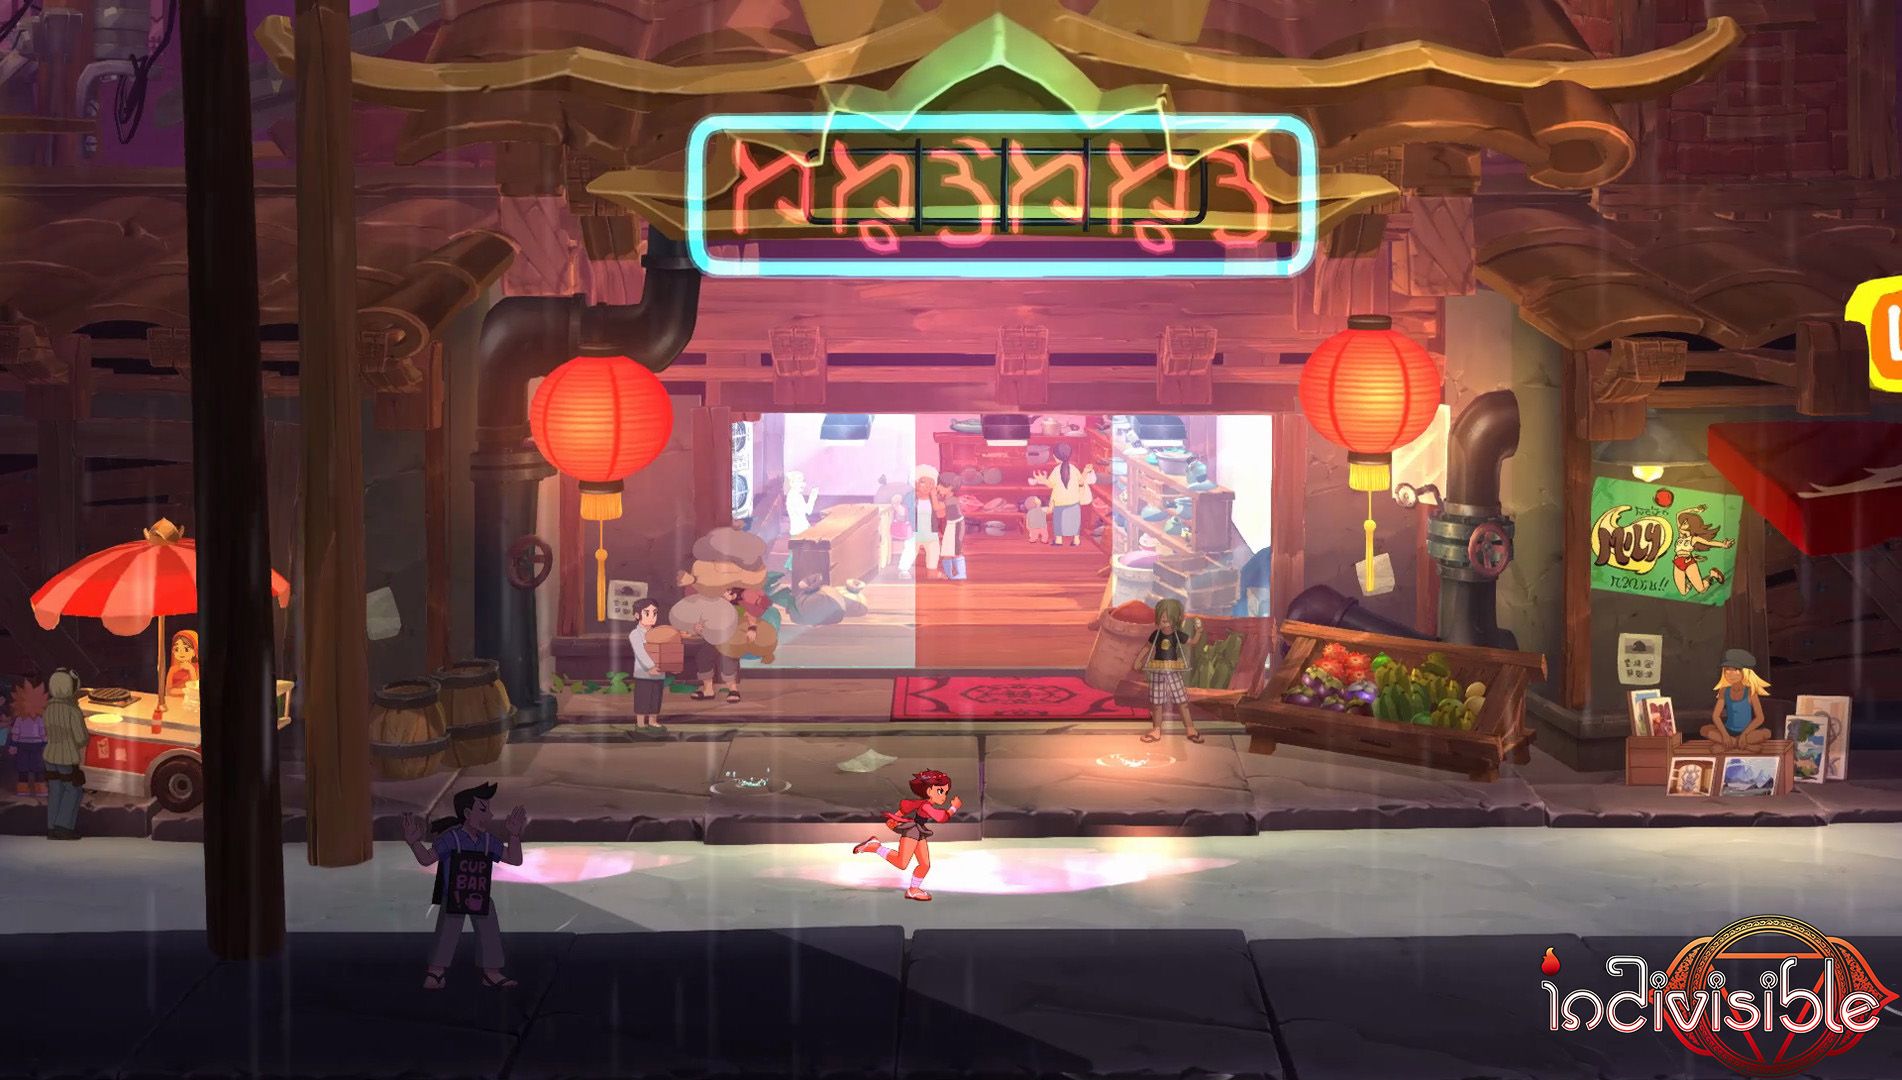 Indivisible Steam promo screenshot girl running next to game logo